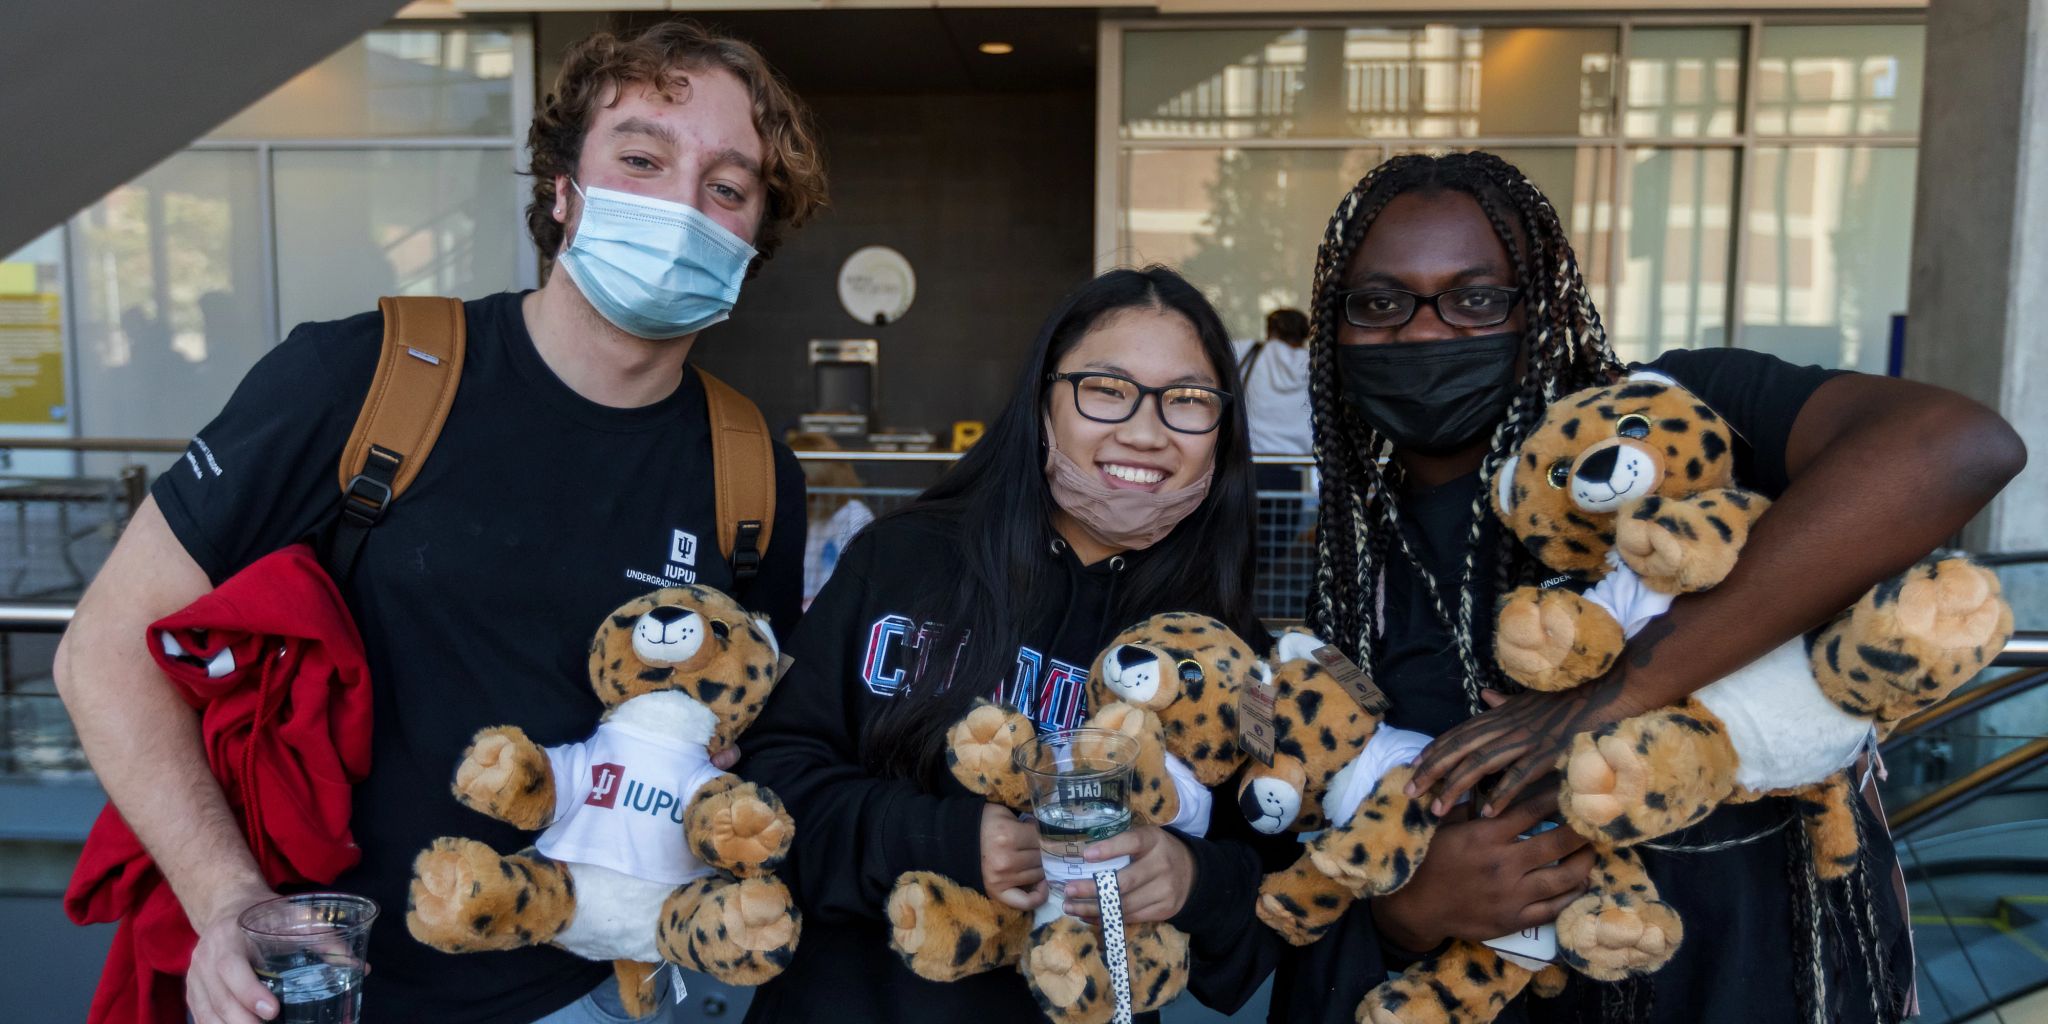 Students holding stuffed jaguars